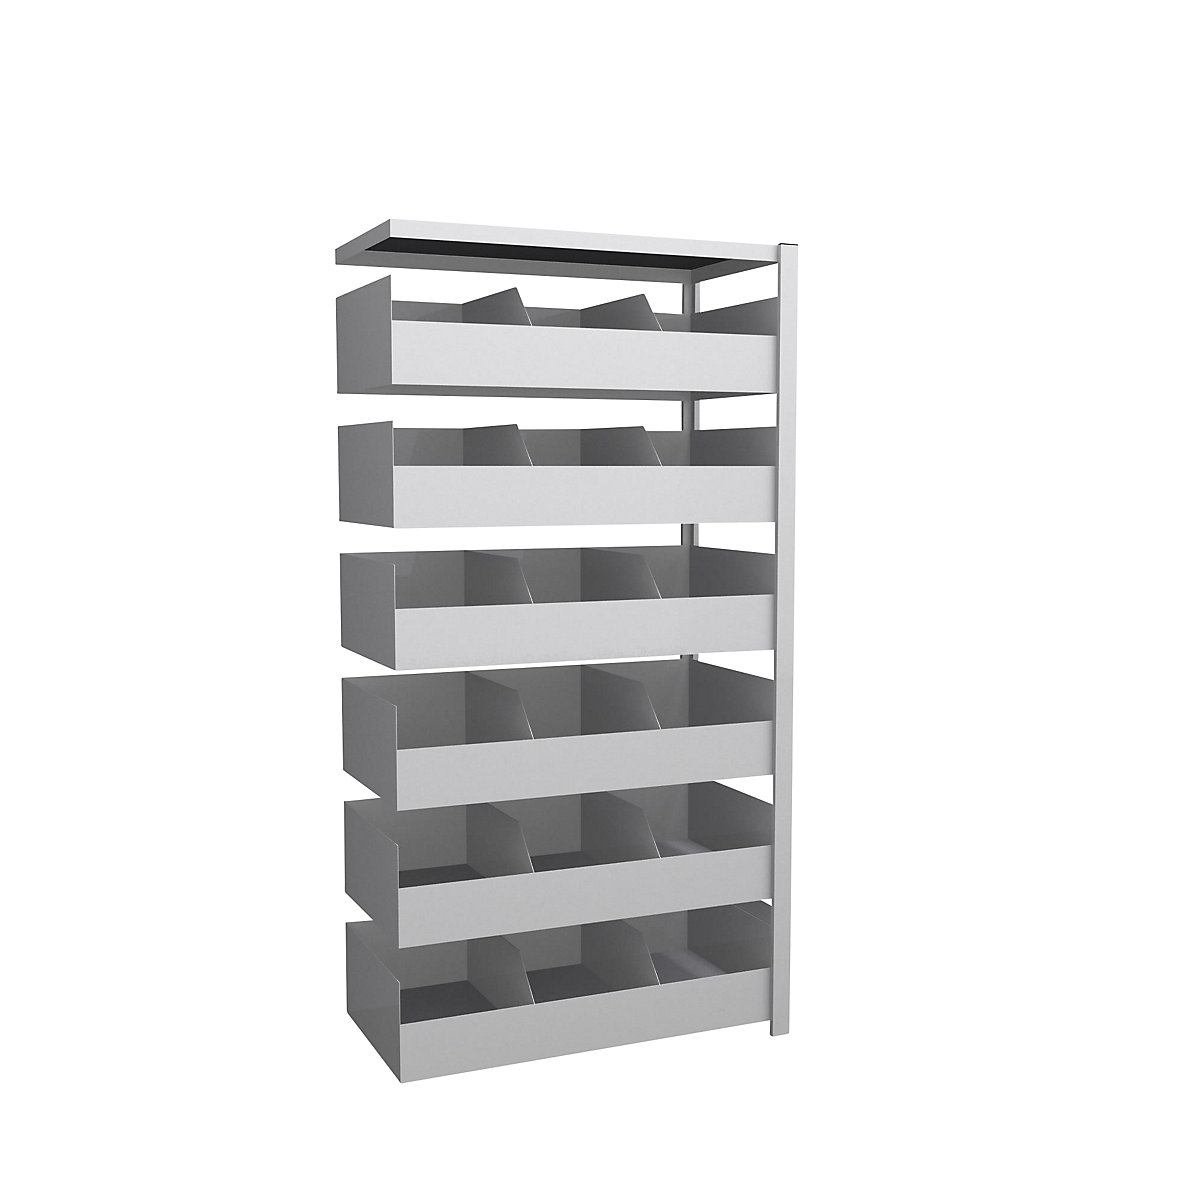 Bulk material shelving unit – hofe, shelf height 2000 mm, extension shelf unit, WxD 1010 x 535 mm